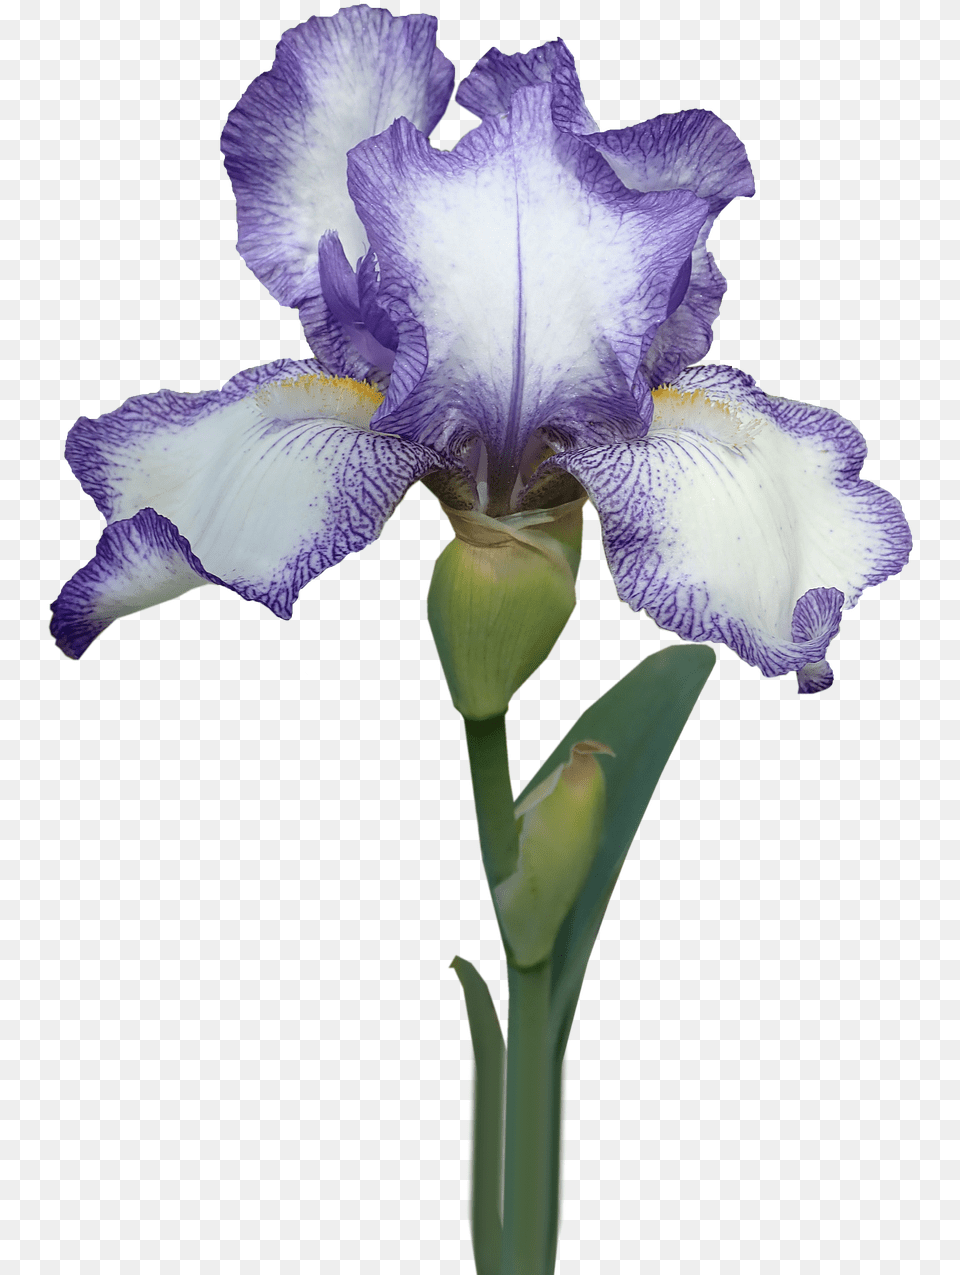 Flower Iris Stem Photo On Pixabay Iris Flower With Stem, Plant, Petal Free Transparent Png